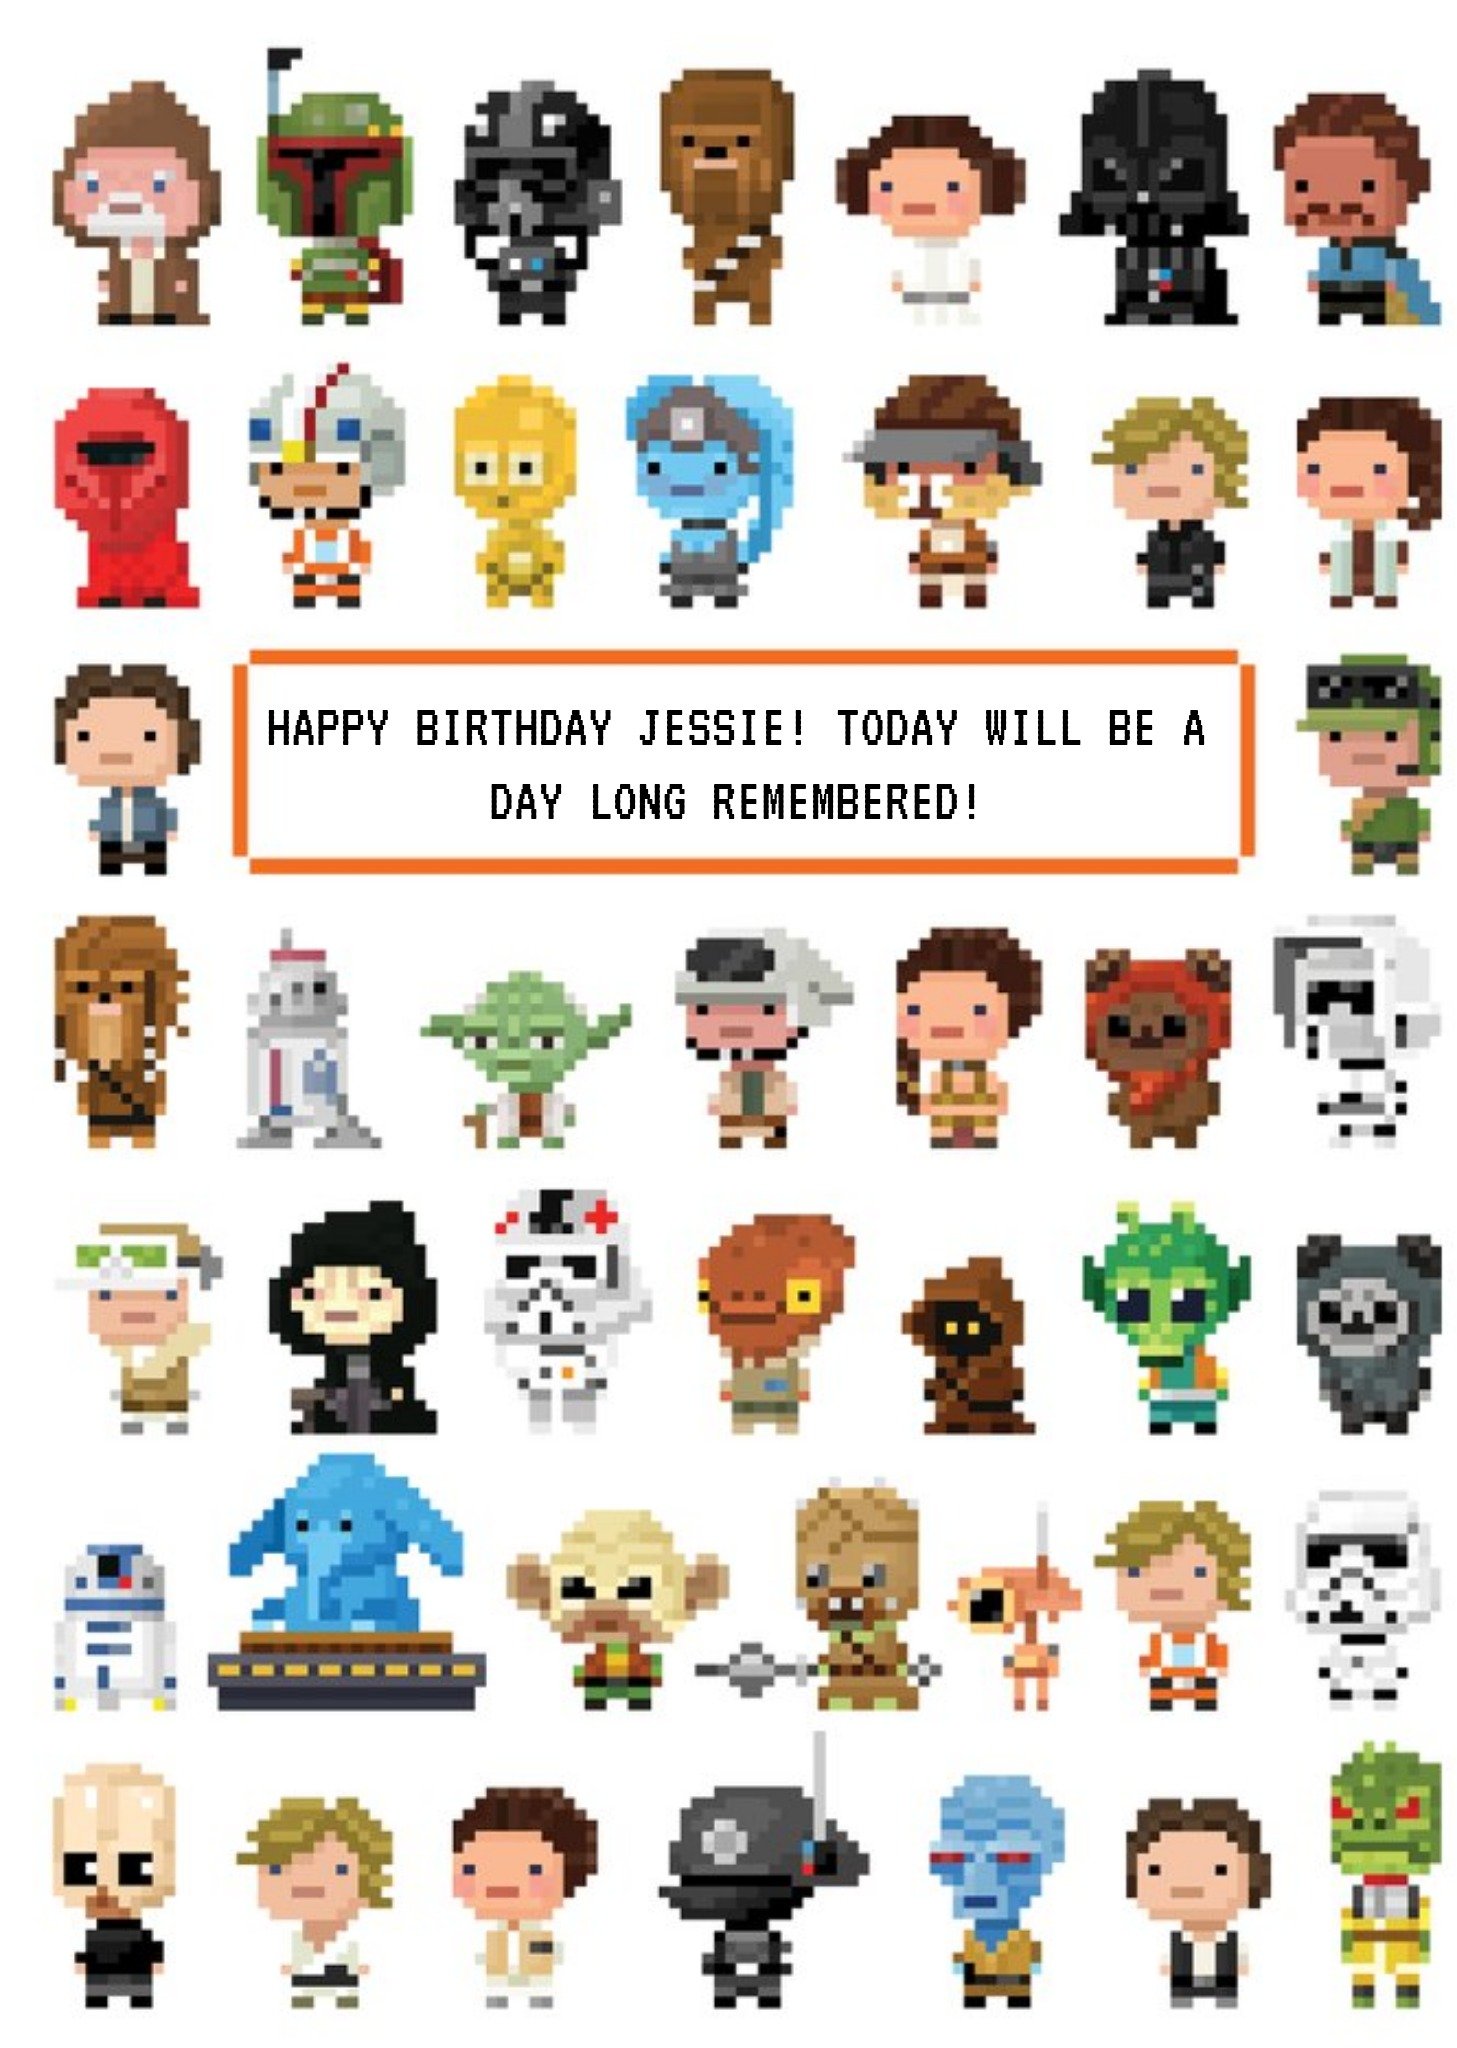 Disney Star Wars Characters 8 Bit Gaming Birthday Card Ecard